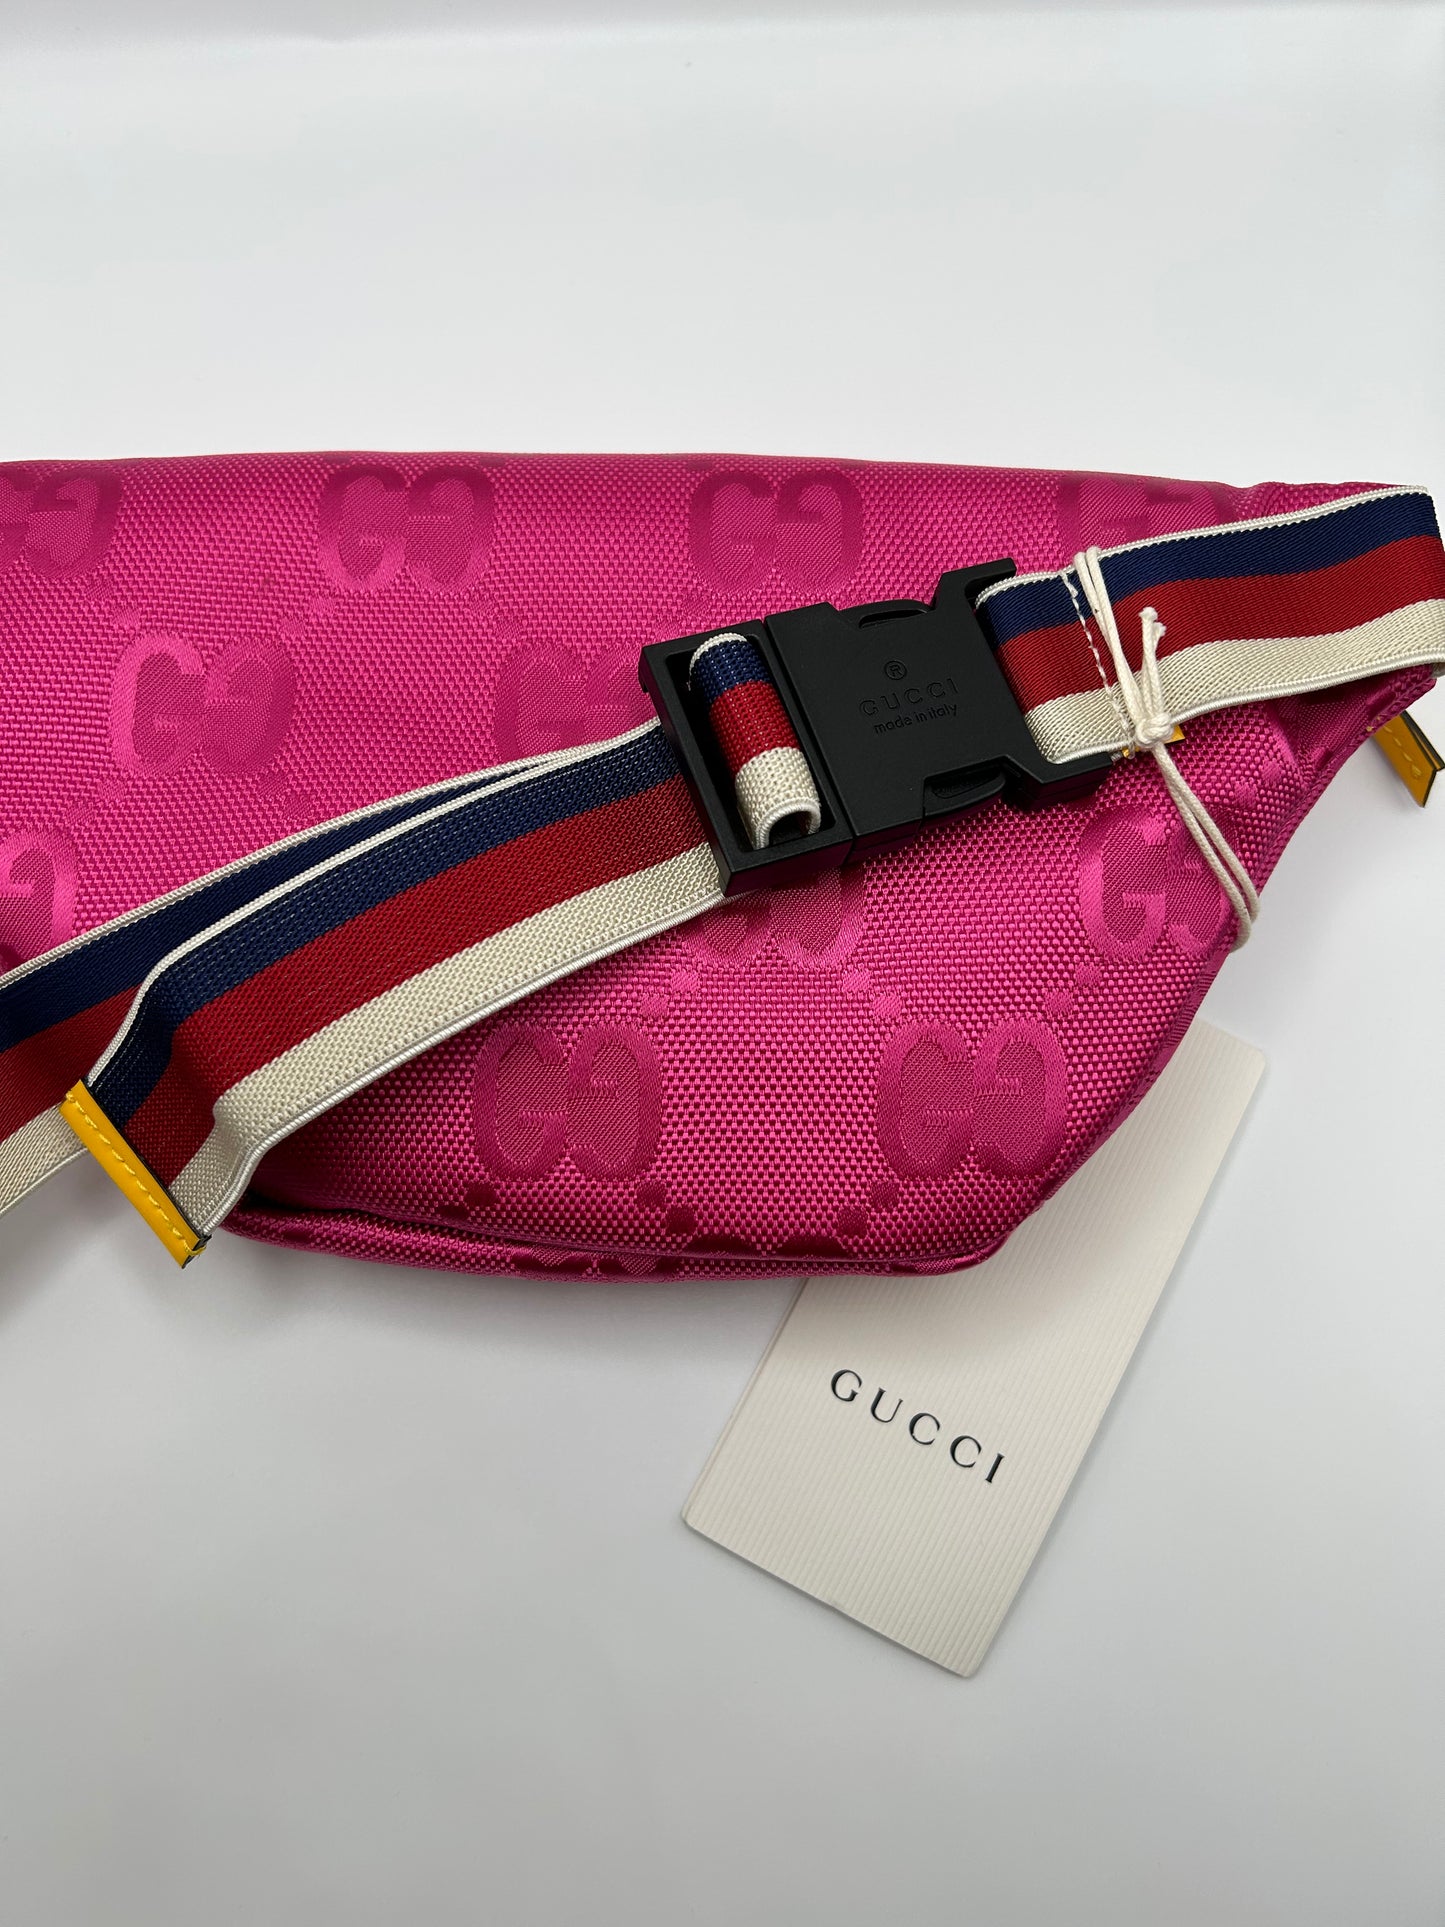 Gucci Body Bag